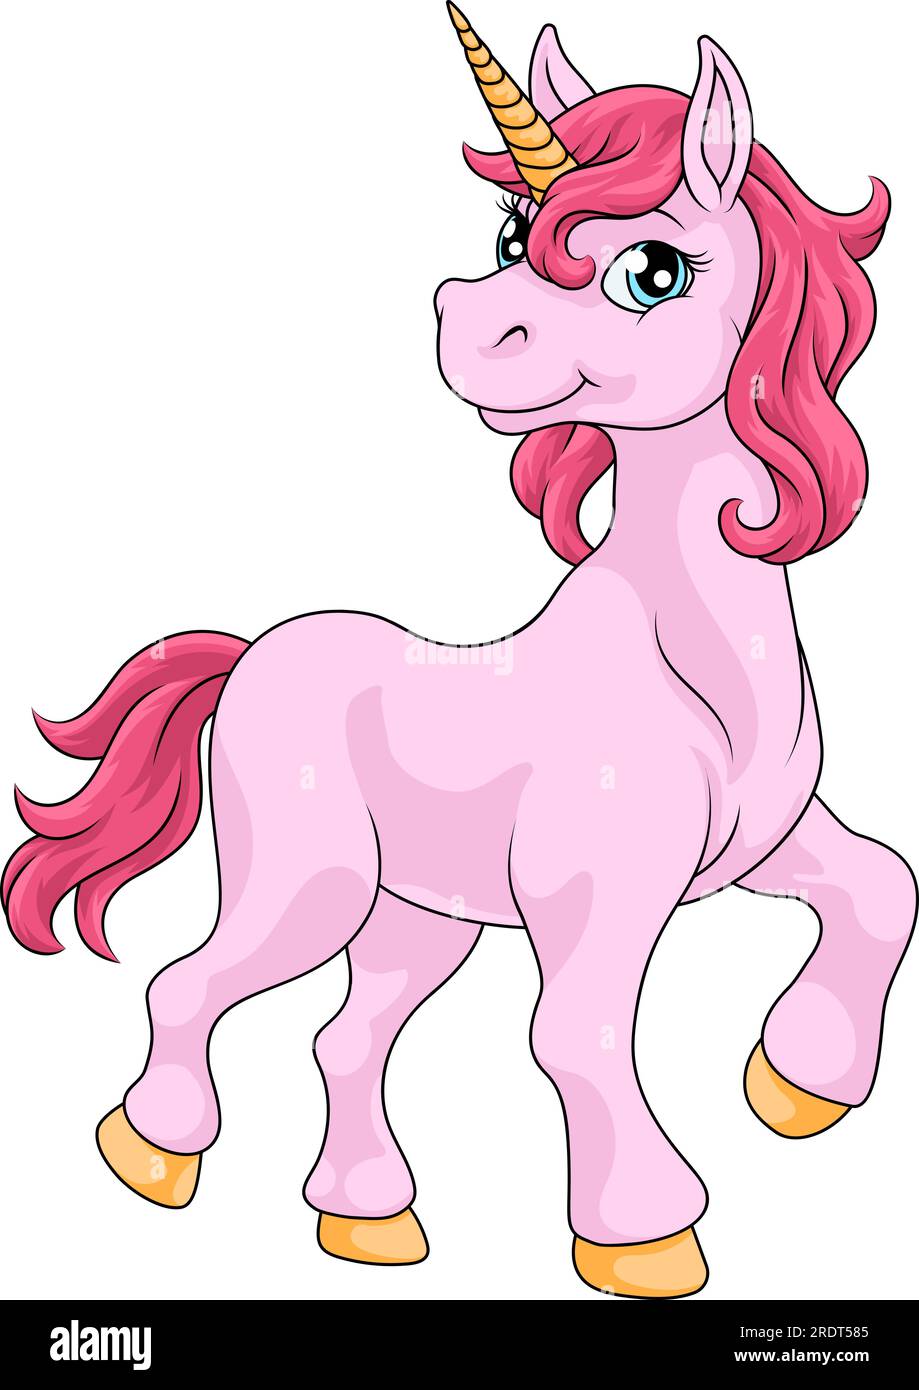 Unicorn Horn Horse Animal Cartoon Mascot From Myth Stock Vector